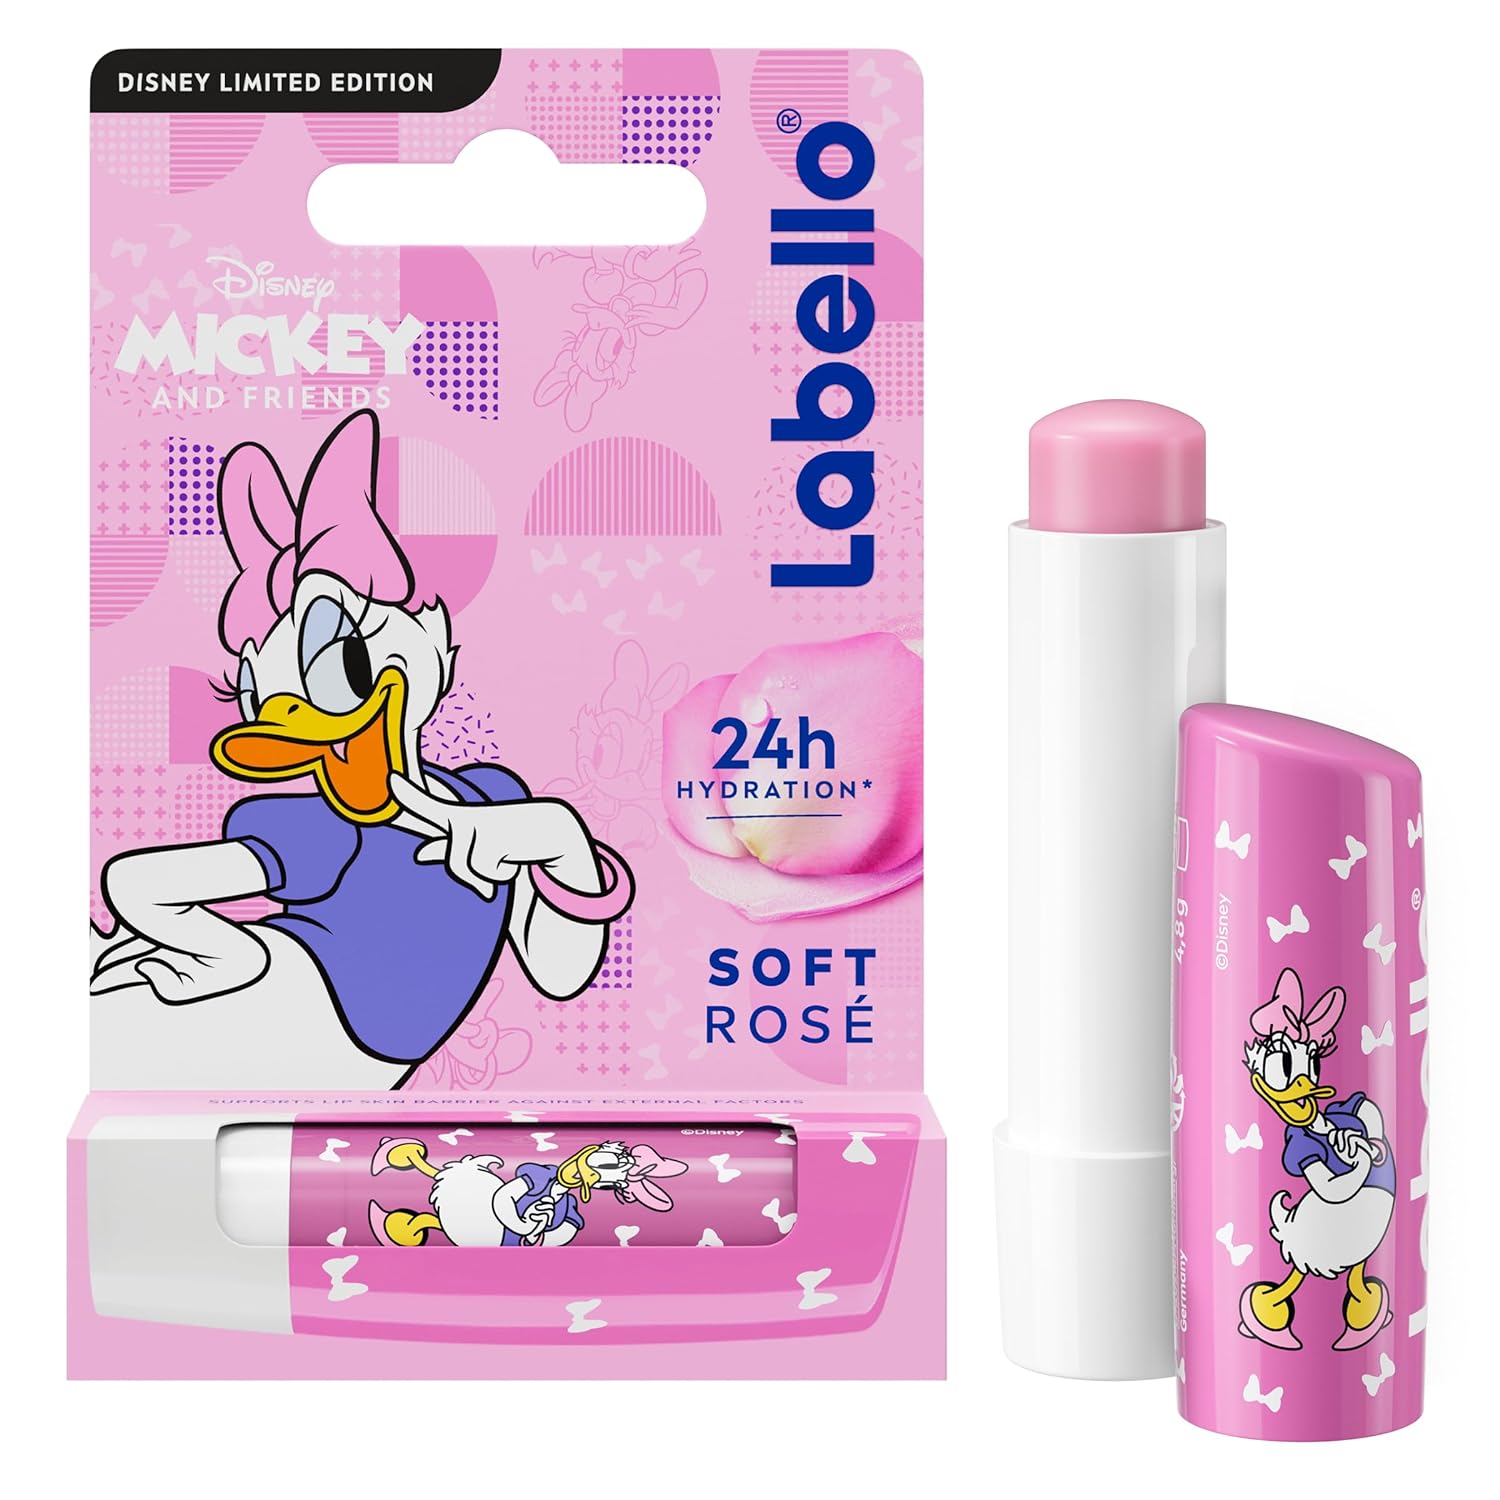 LABELLO Soft Rosé Daisy Limited Edition Disney (1 x 5.5 ml), Moisturising Pearlescent Lipstick for Children, Nourishing Lip Balm, Long-Lasting Moisturising